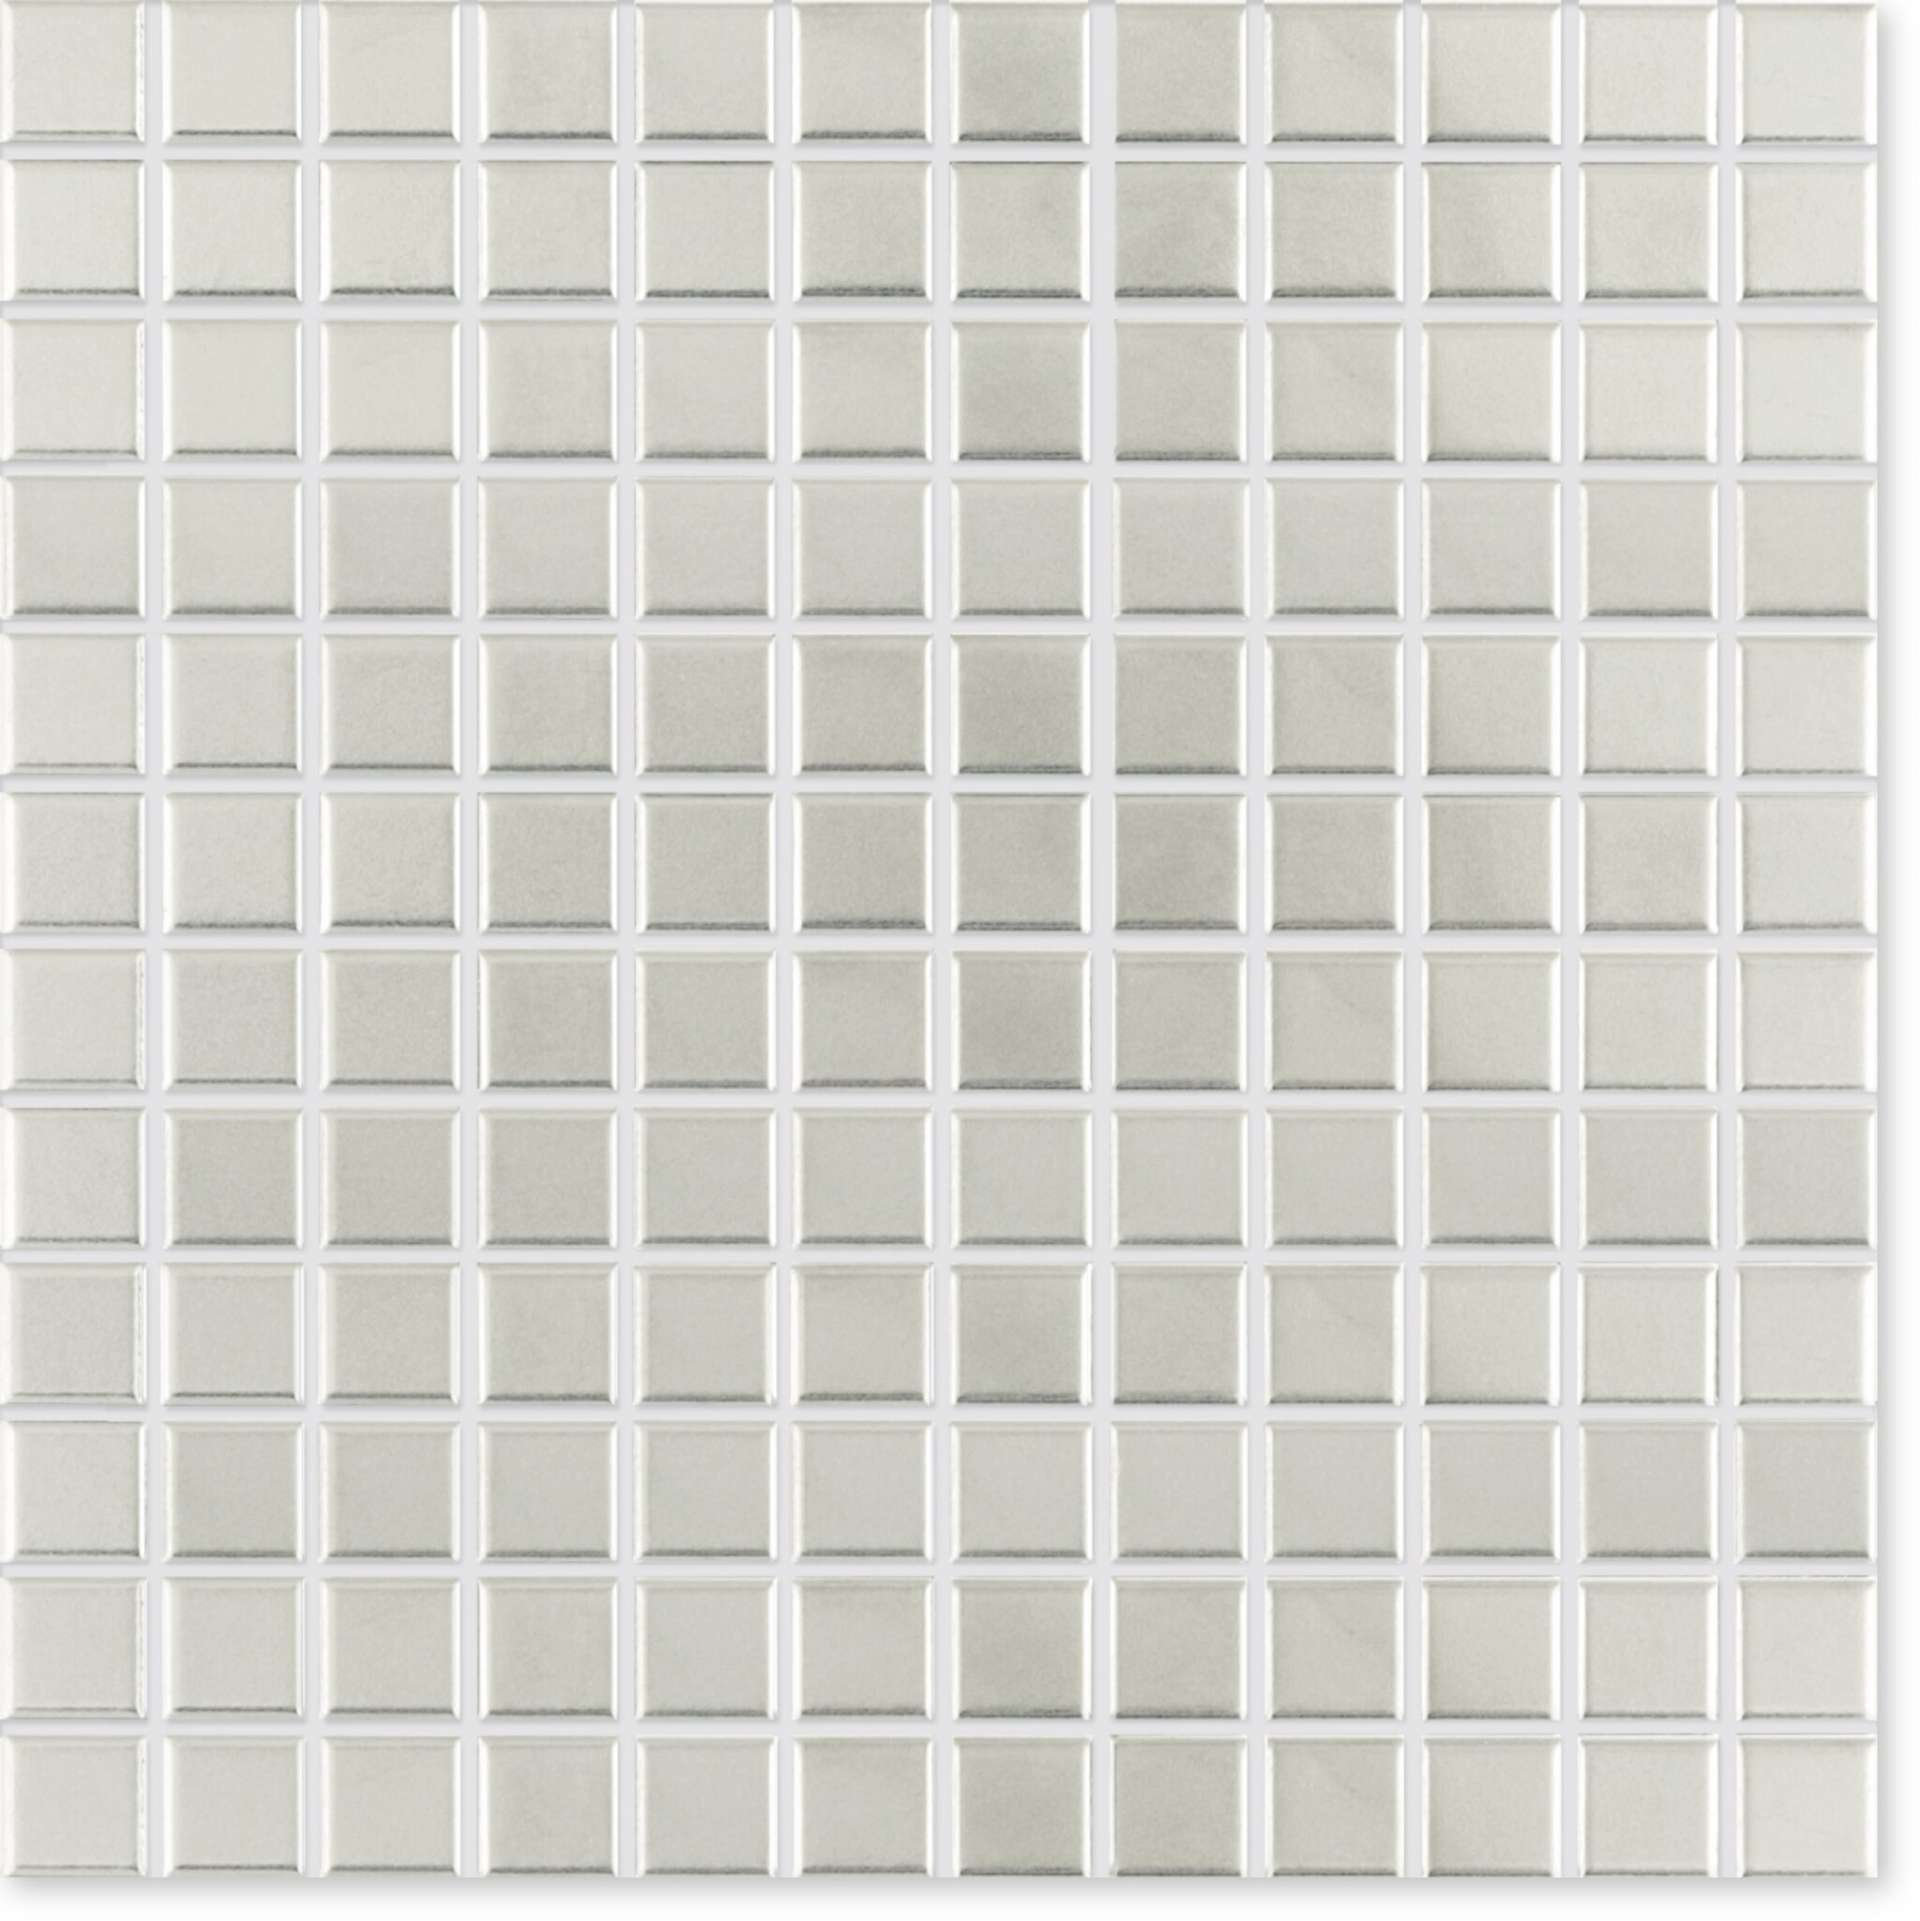 Мозаика Jasba Fresh Platin Seidenglanz 2455, цвет металлик, поверхность глянцевая, квадрат, 316x316